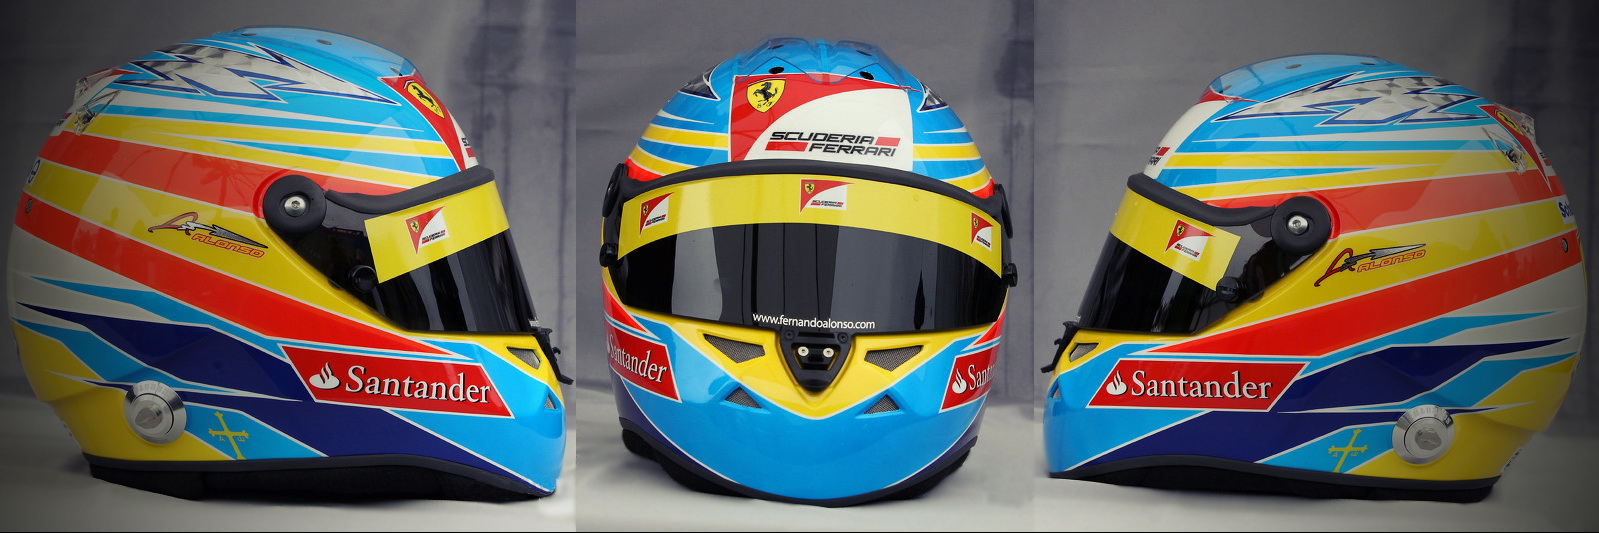 Шлем Фернандо Алонсо на сезон 2011 года | 2011 helmet of Fernando Alonso